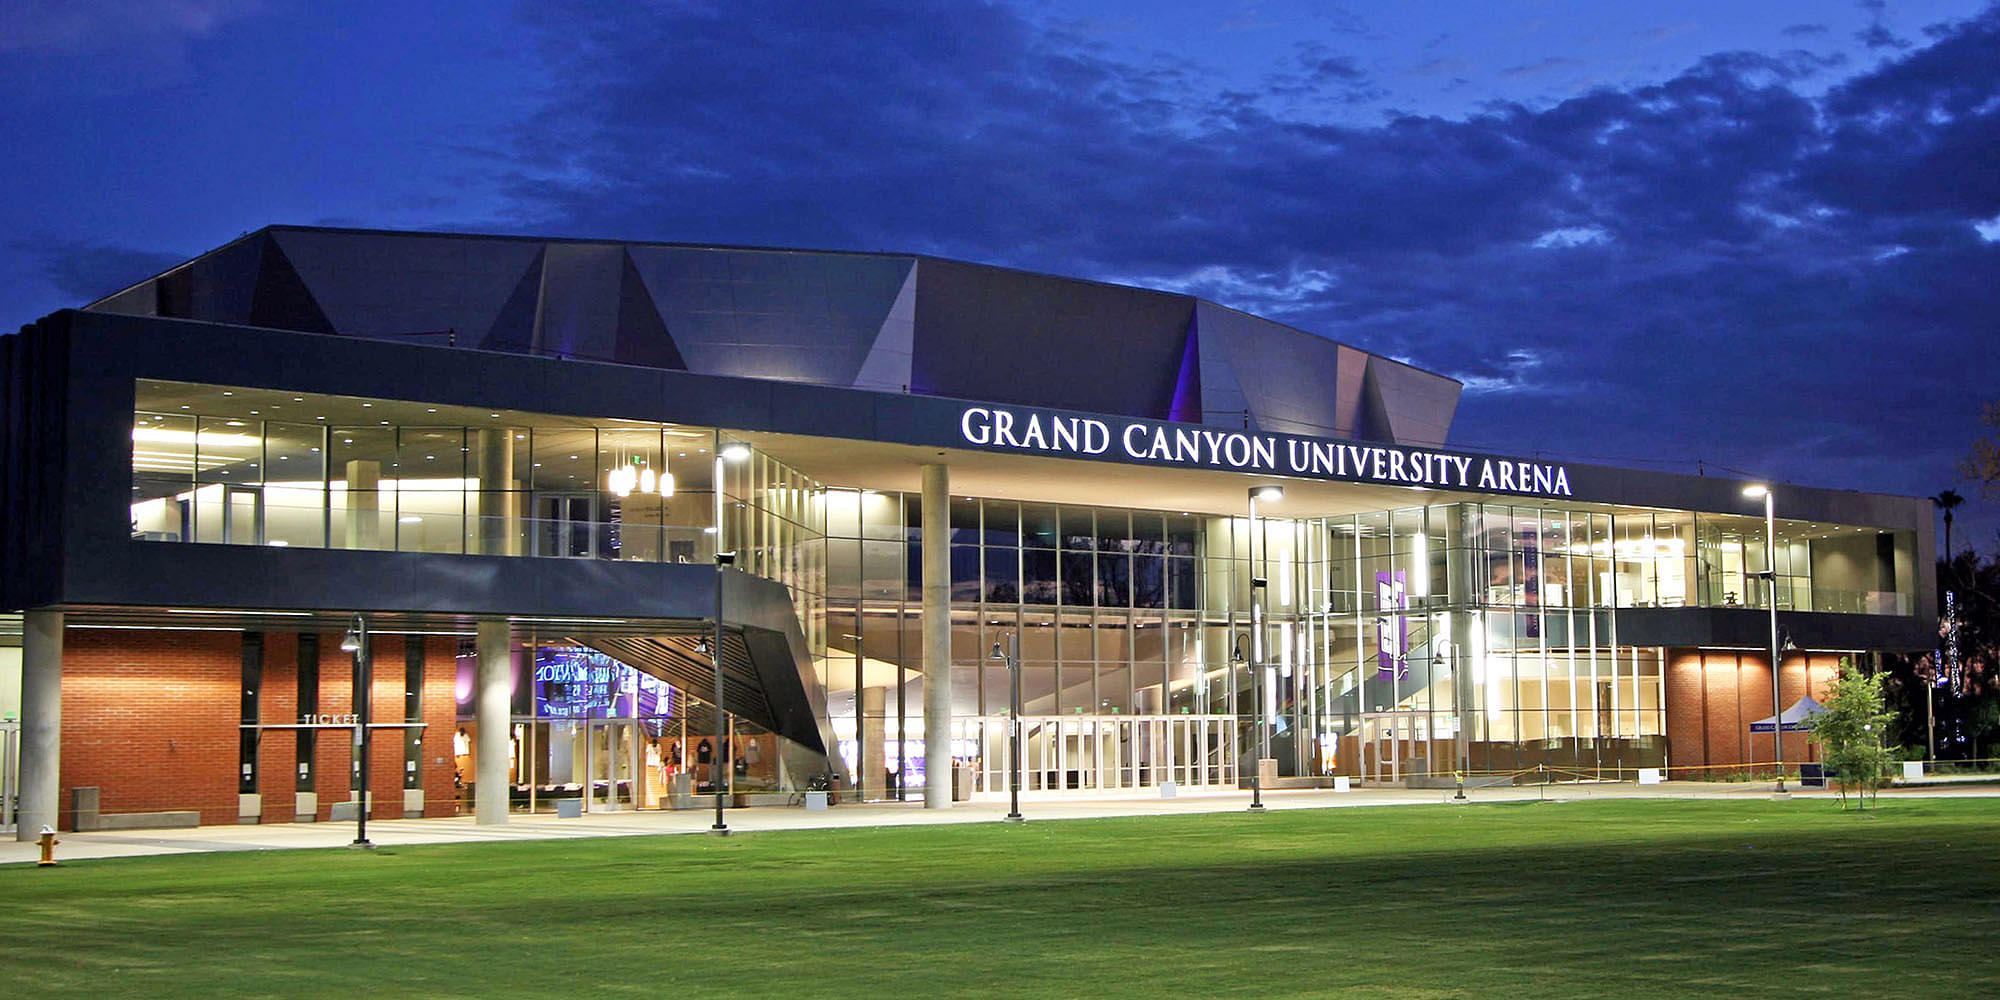 Grand Canyon University 2022 Graduation Dates Graduation Cap 2022